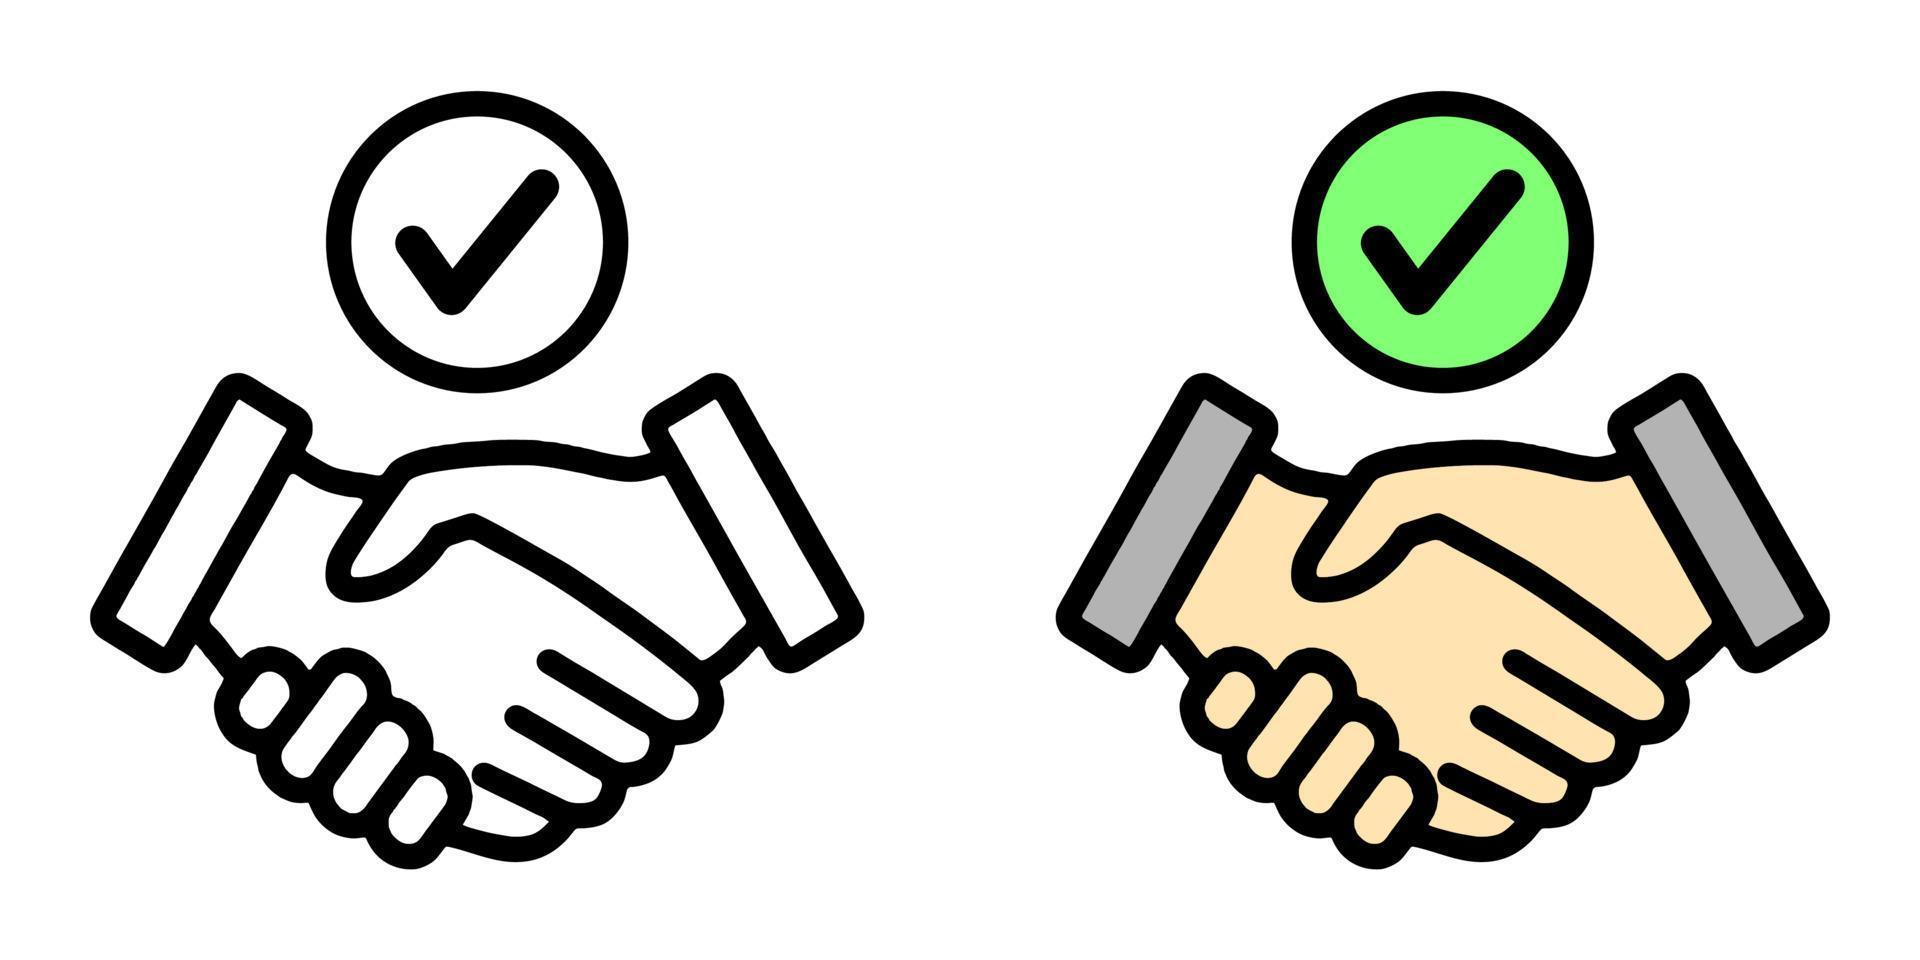 Abbildung Vektorgrafik von Handshake, Vereinbarung, Deal-Symbol vektor